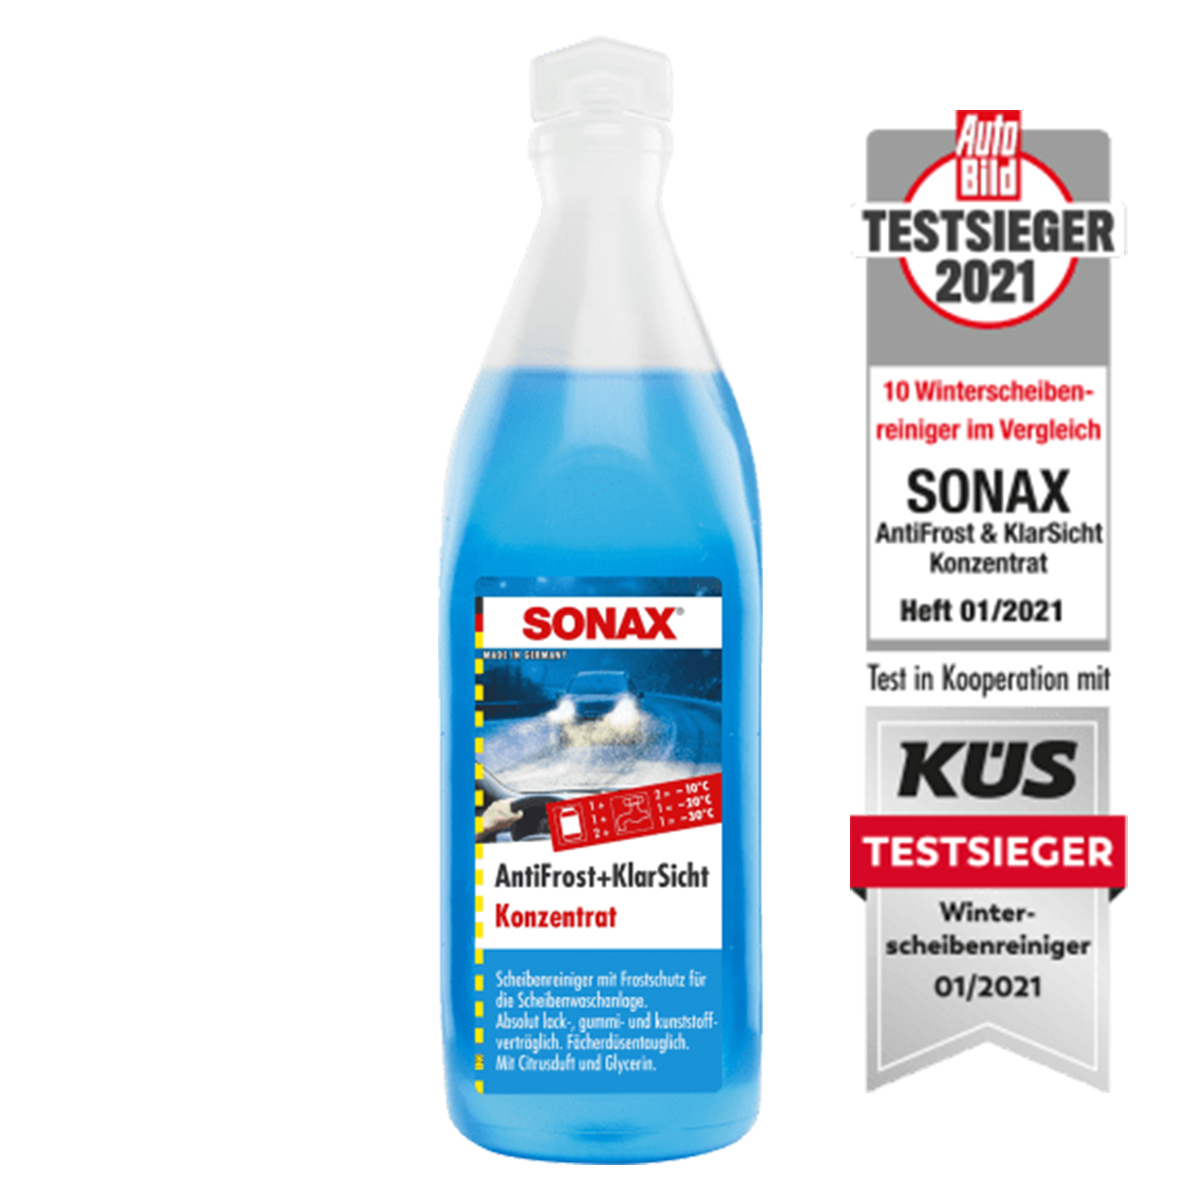 SONAX Anti Frost & Klarsicht Konzentrat, 60 L